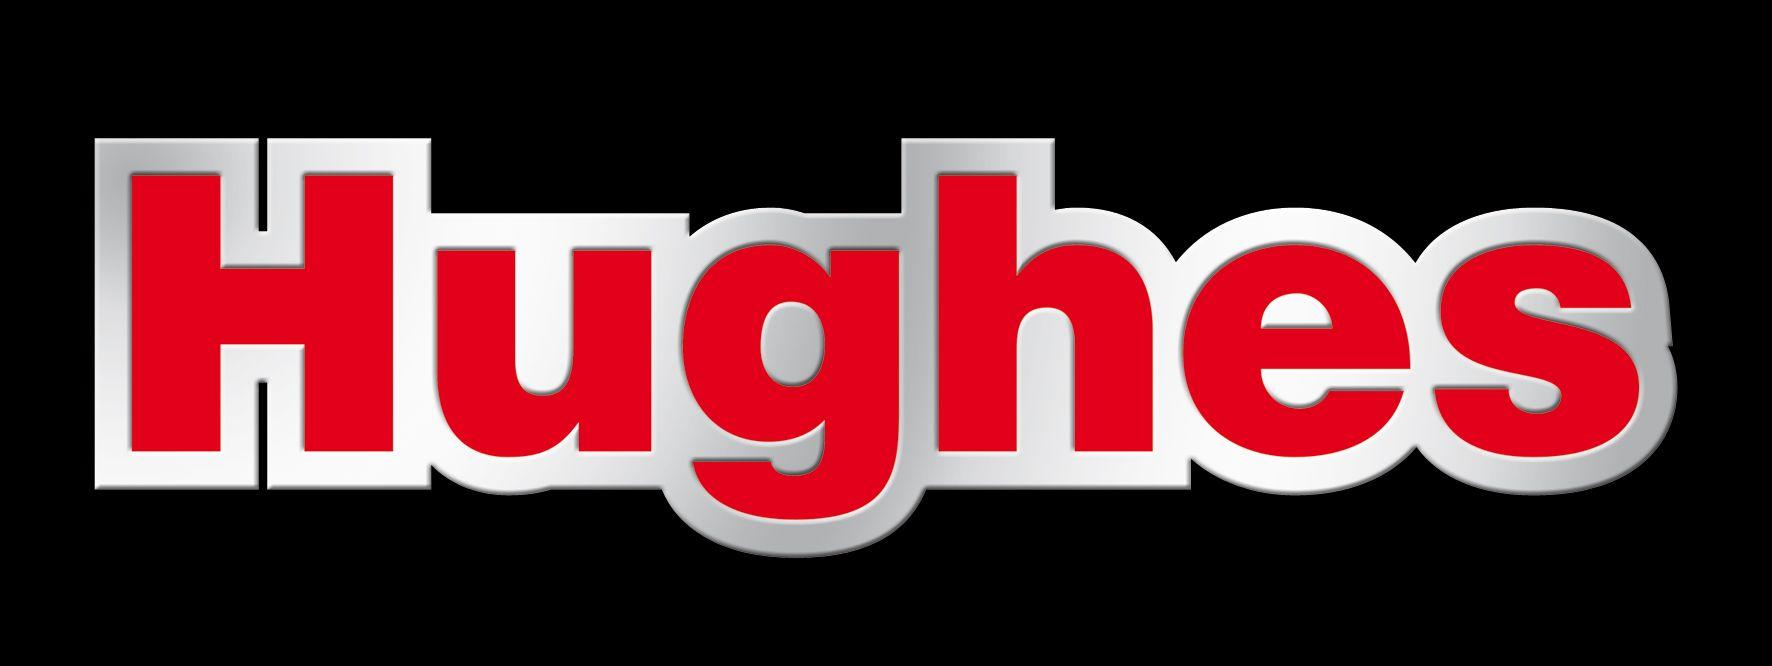 Hughes Logo - hughes-logo – Diss Otters